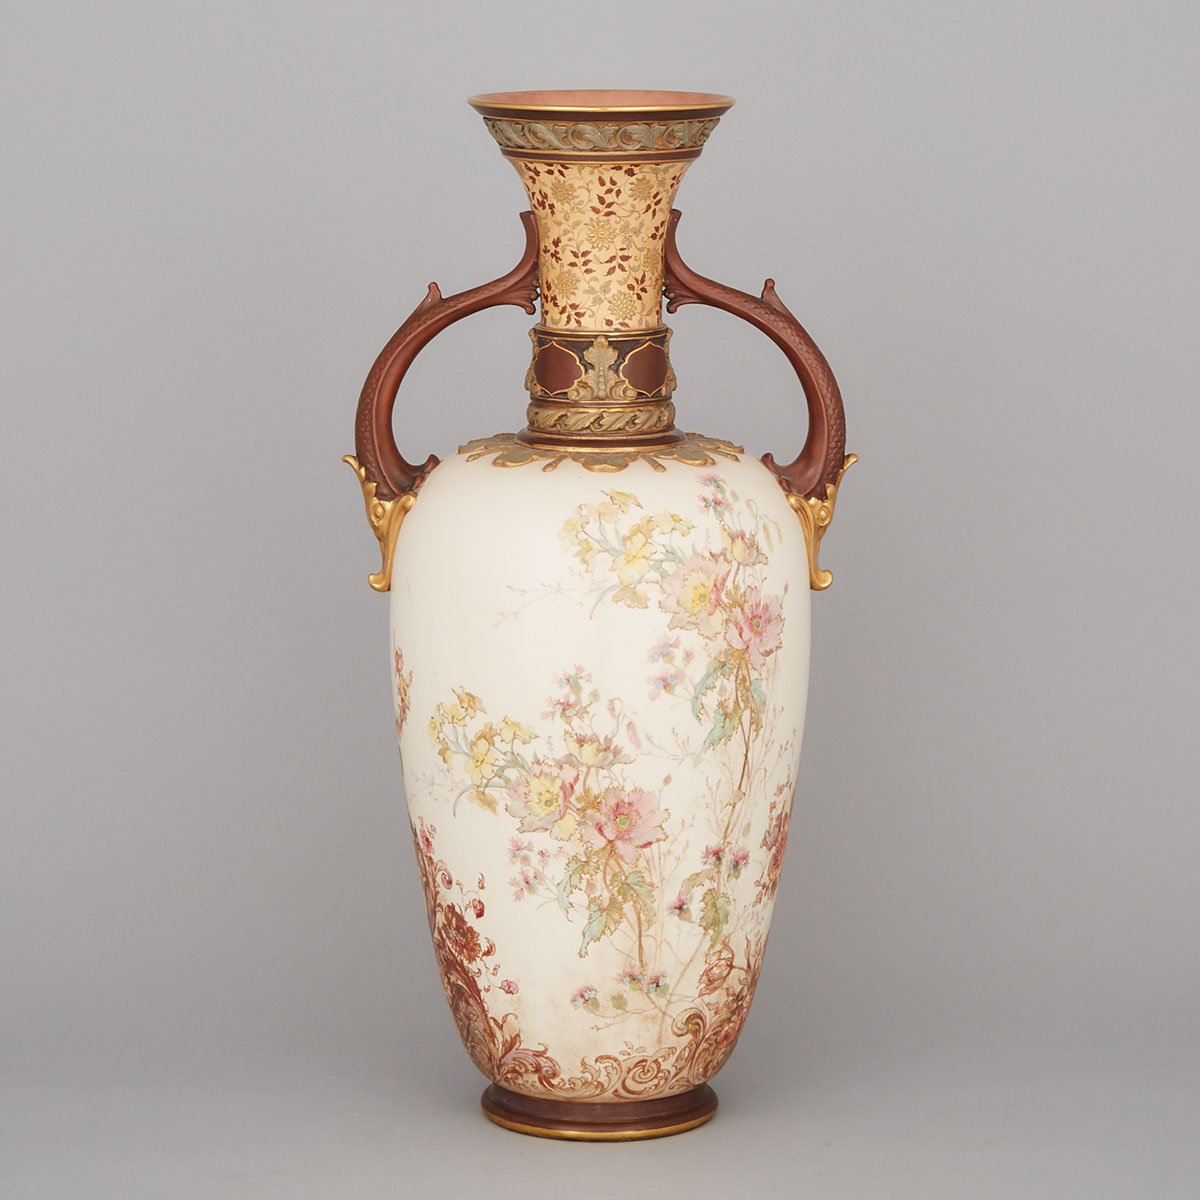 Doulton Burslem ‘Doulton & Slater’s Patent’ Two-Handled Vase, c.1895